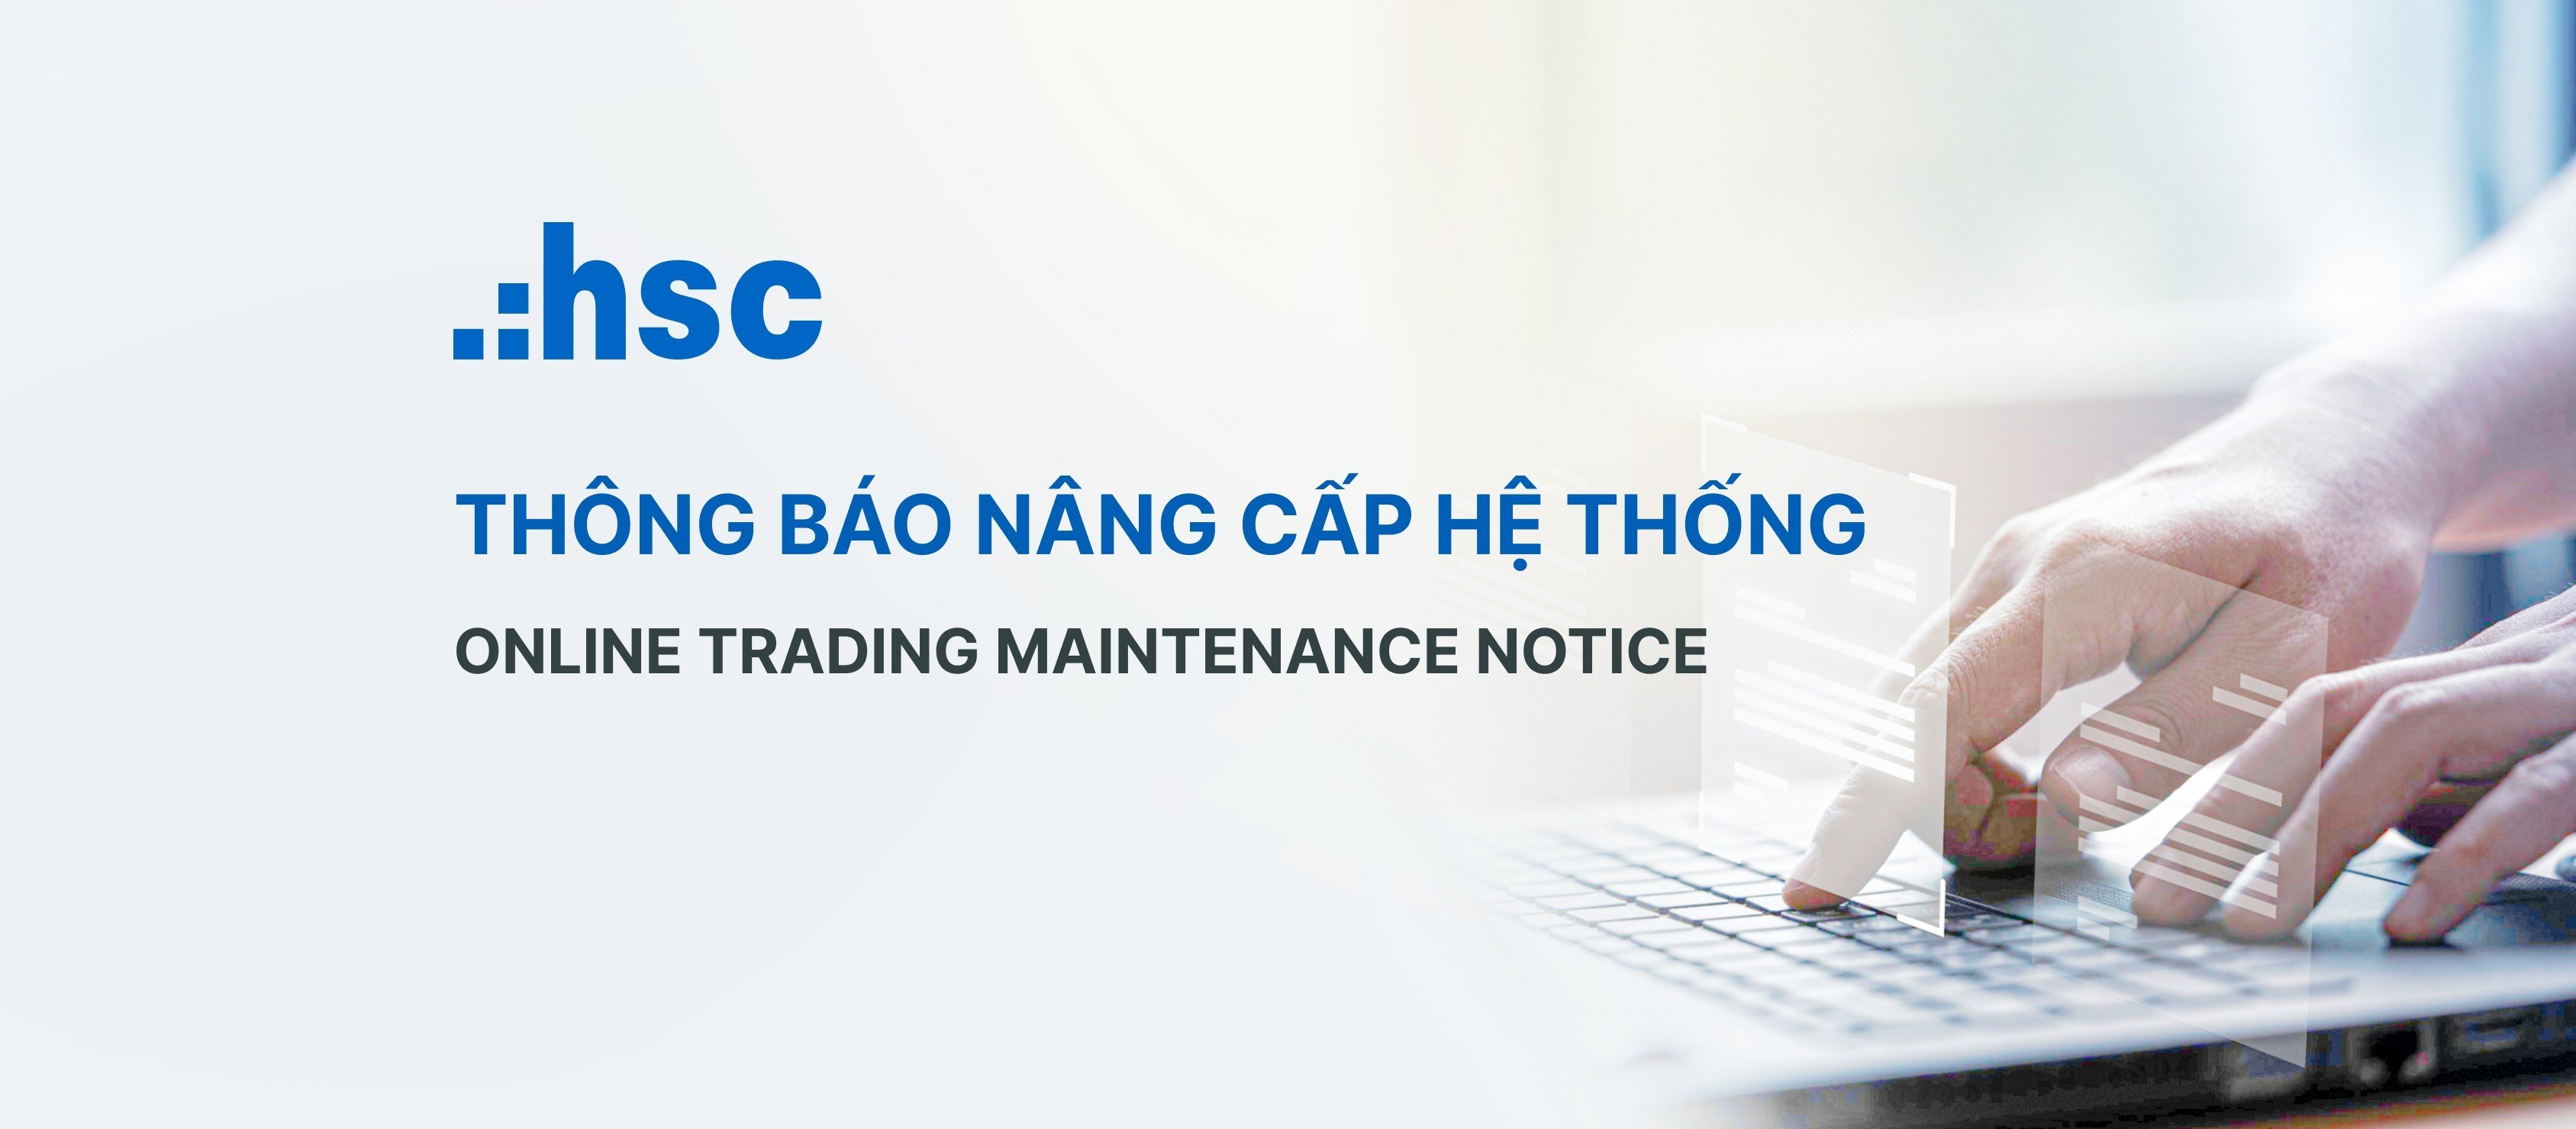 Online trading maintenance notice